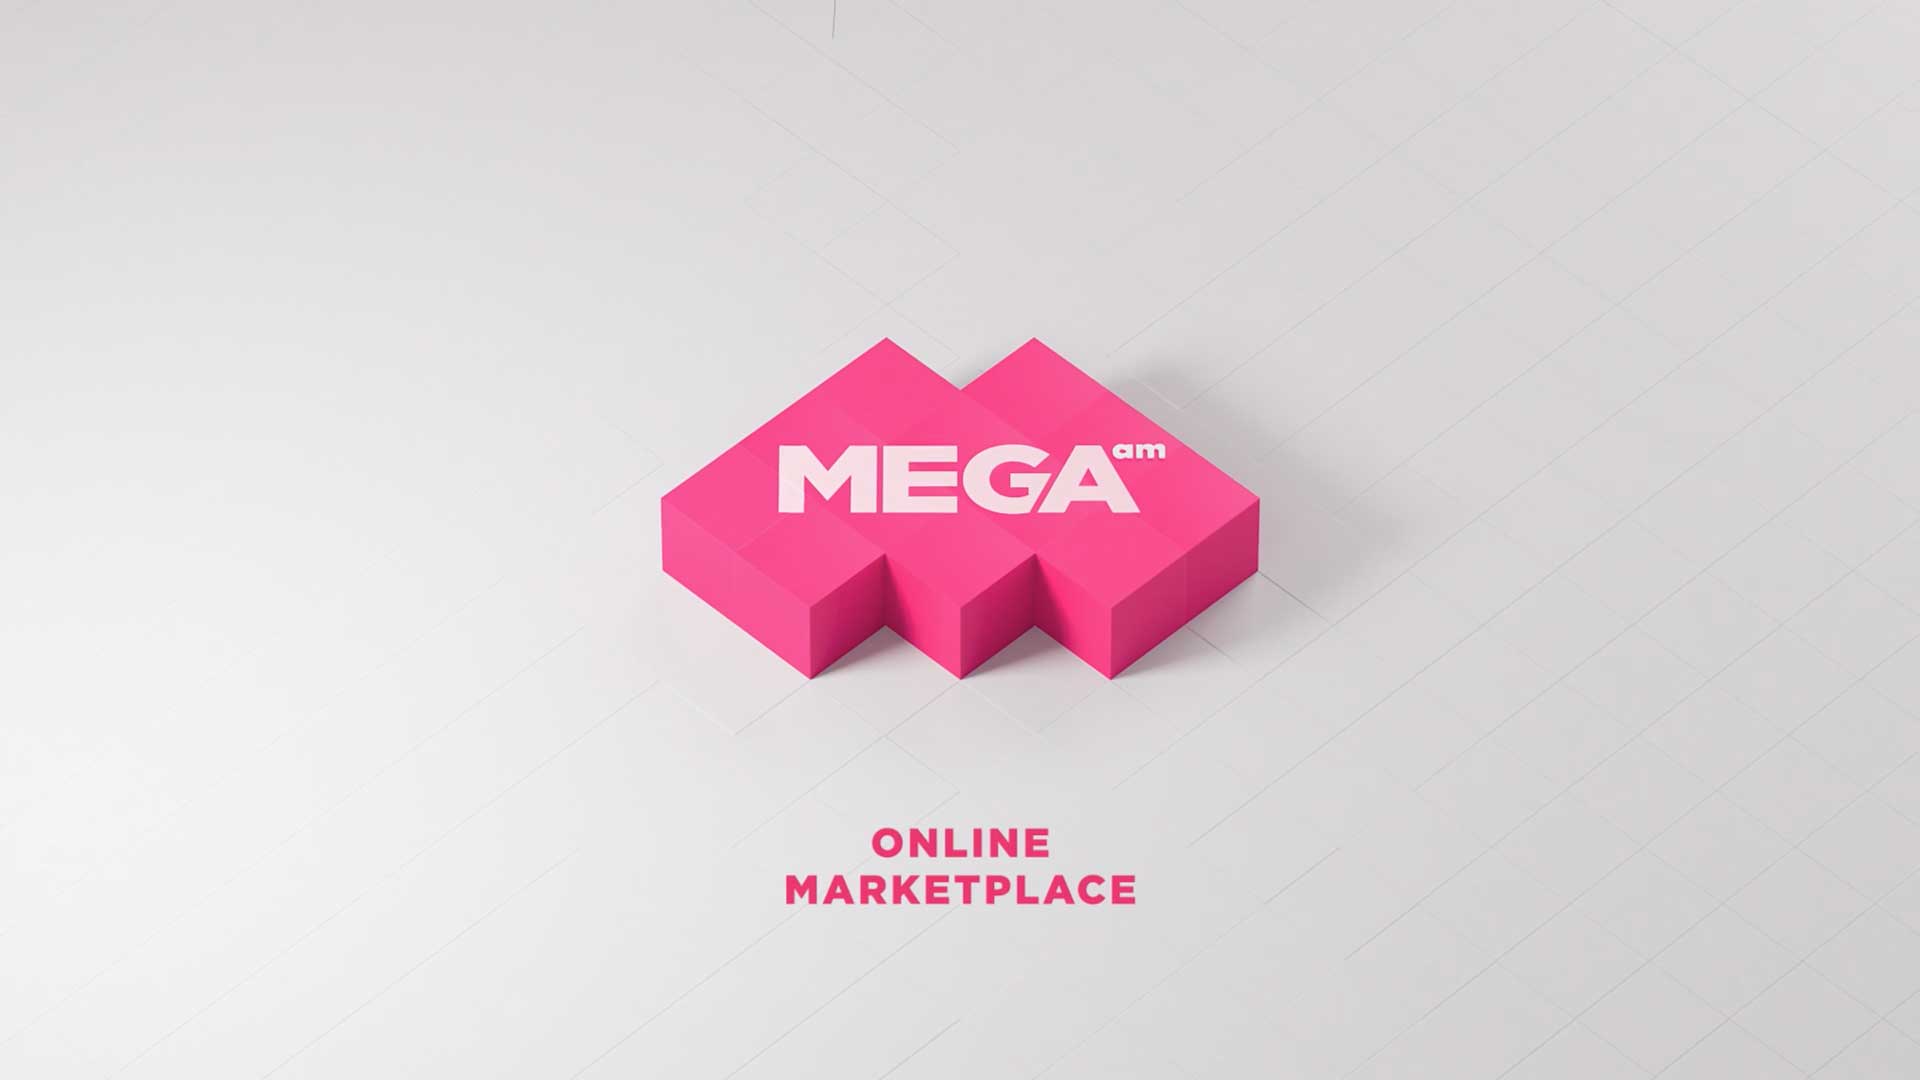 MEGA Online Marketplace Hasmik Mkhchyan Triada Studios | STASH MAGAZINE